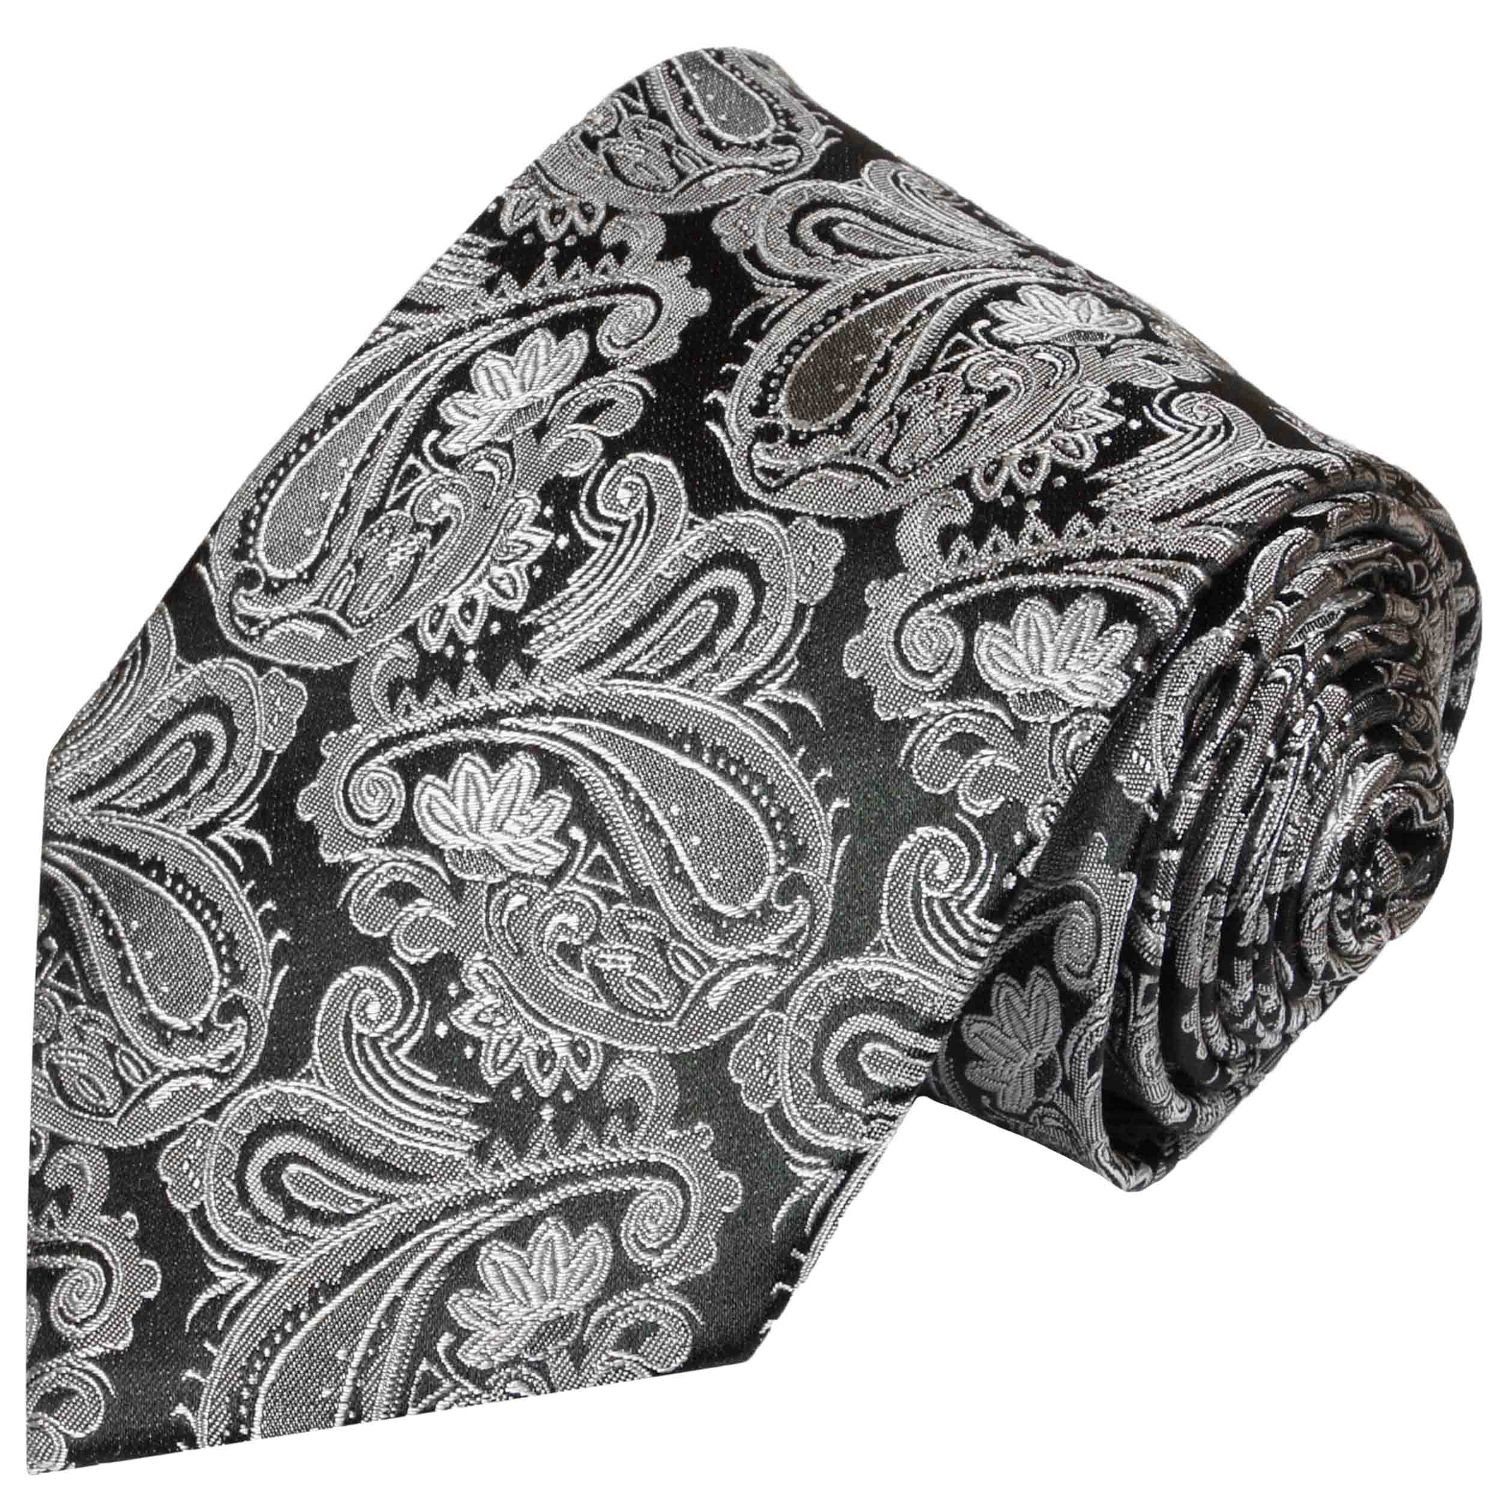 Paul Malone Krawatte Elegante Seidenkrawatte Herren Schlips paisley brokat 100% Seide Schmal (6cm), schwarz silber grau 627